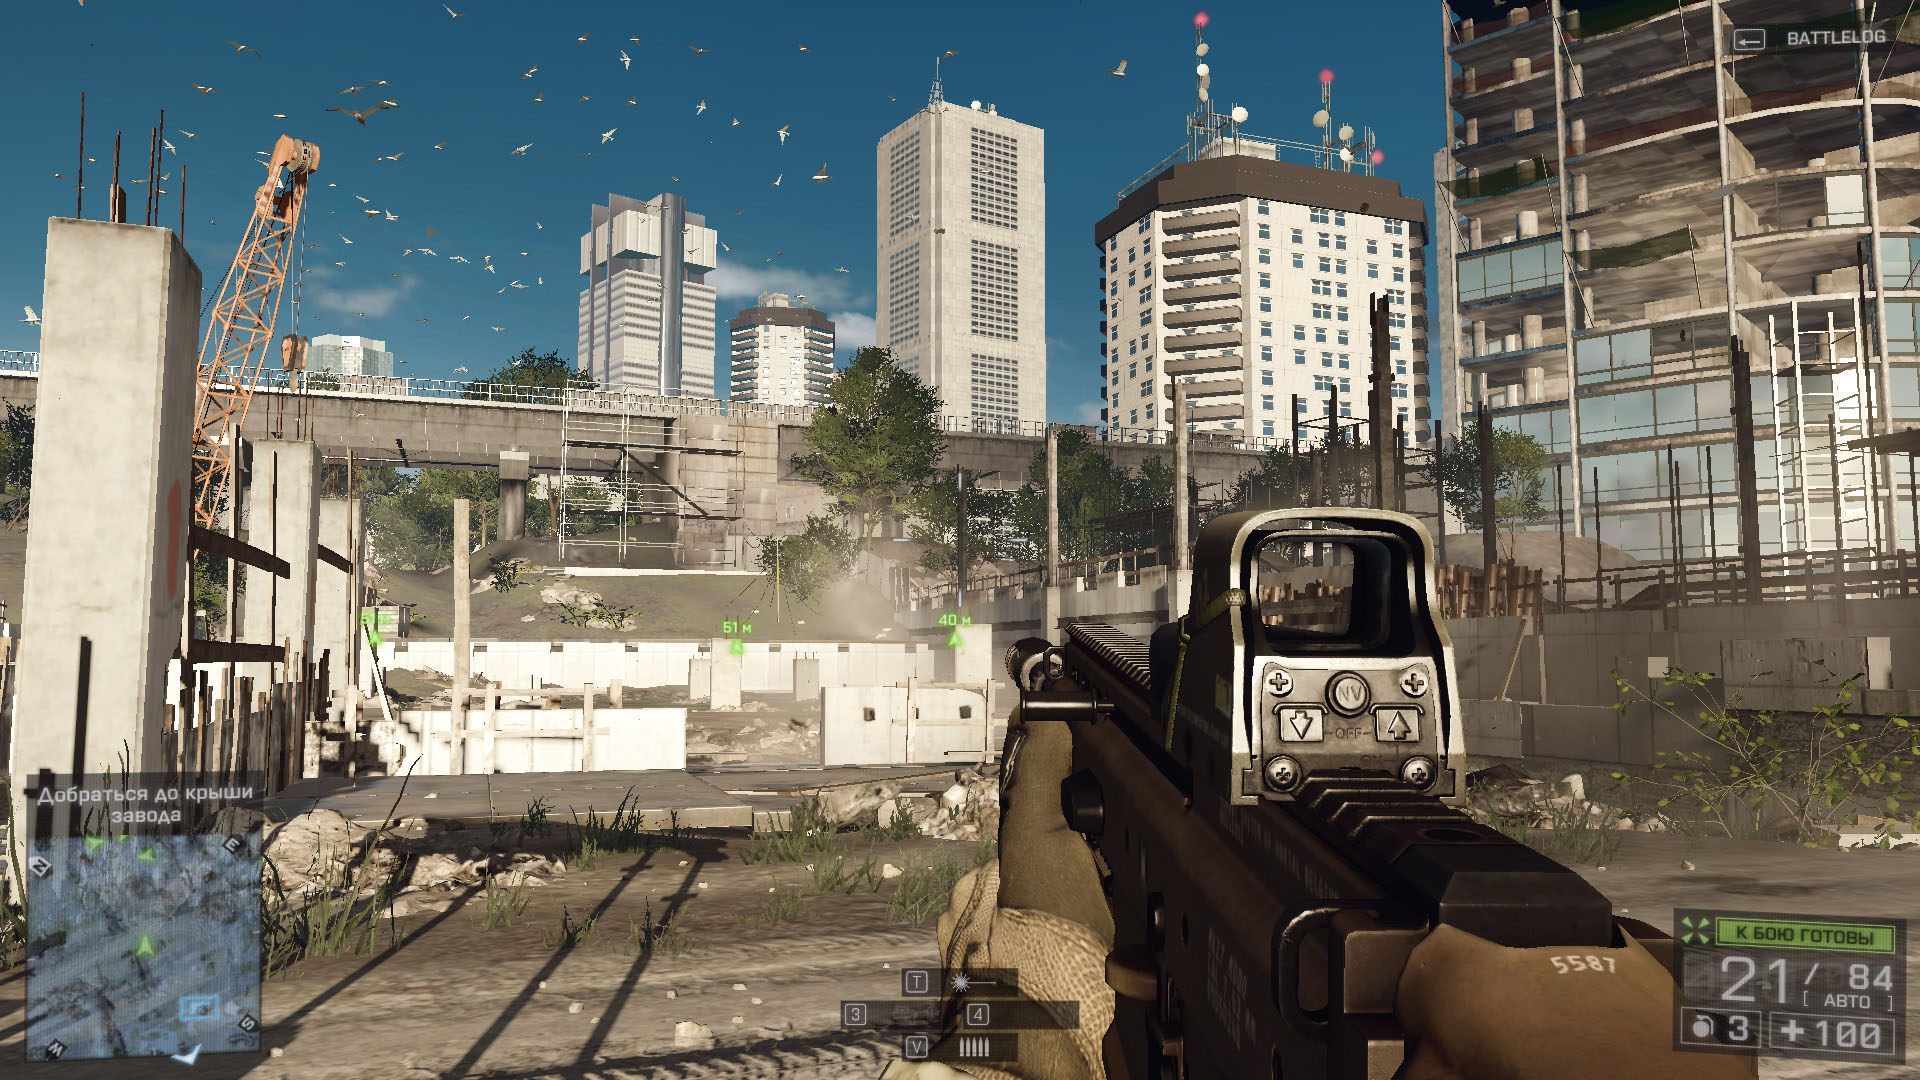 Battlefield 4 - Premium Edition + Мультиплеер (2013/PC/Русский), RePack от Canek77